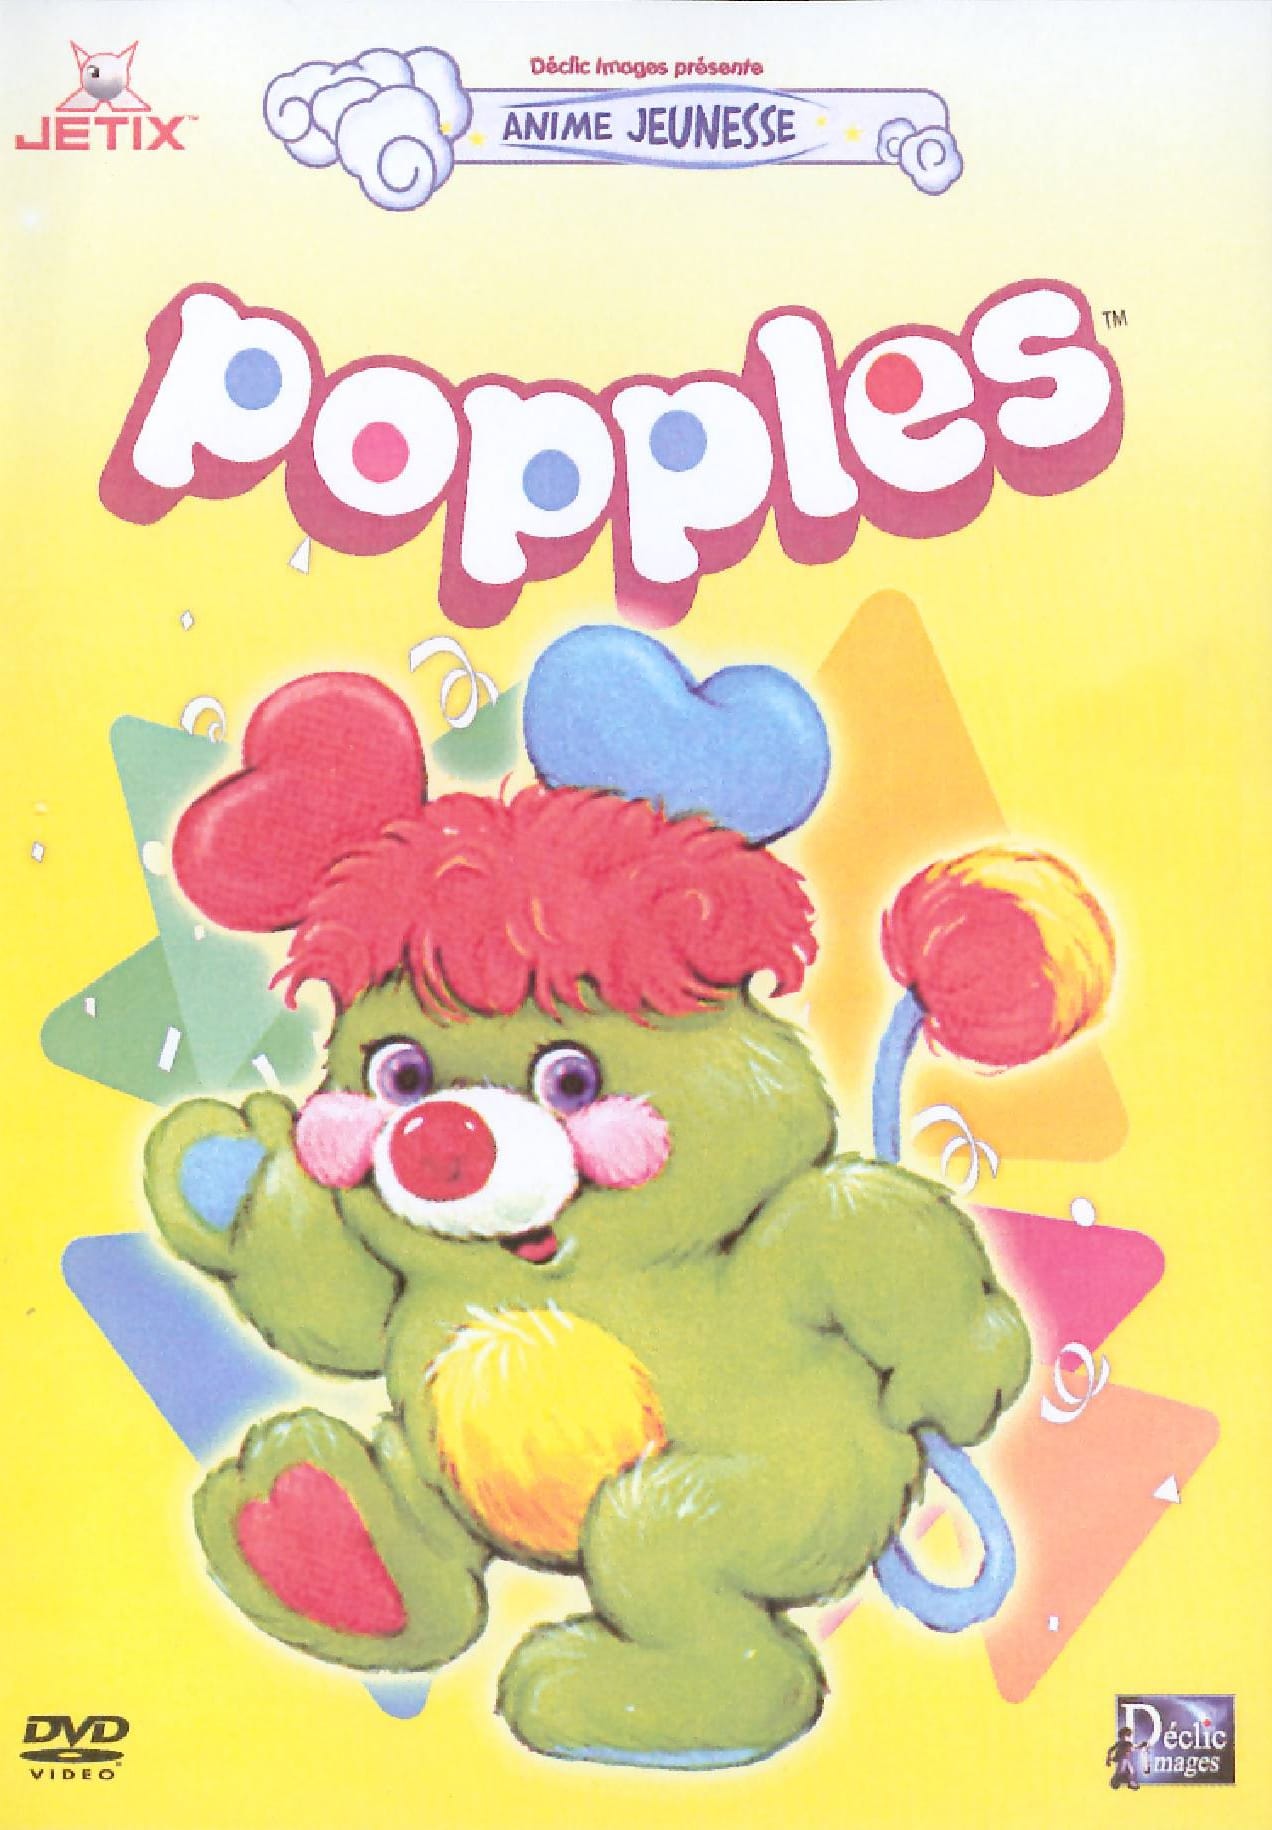 Popples (1986)